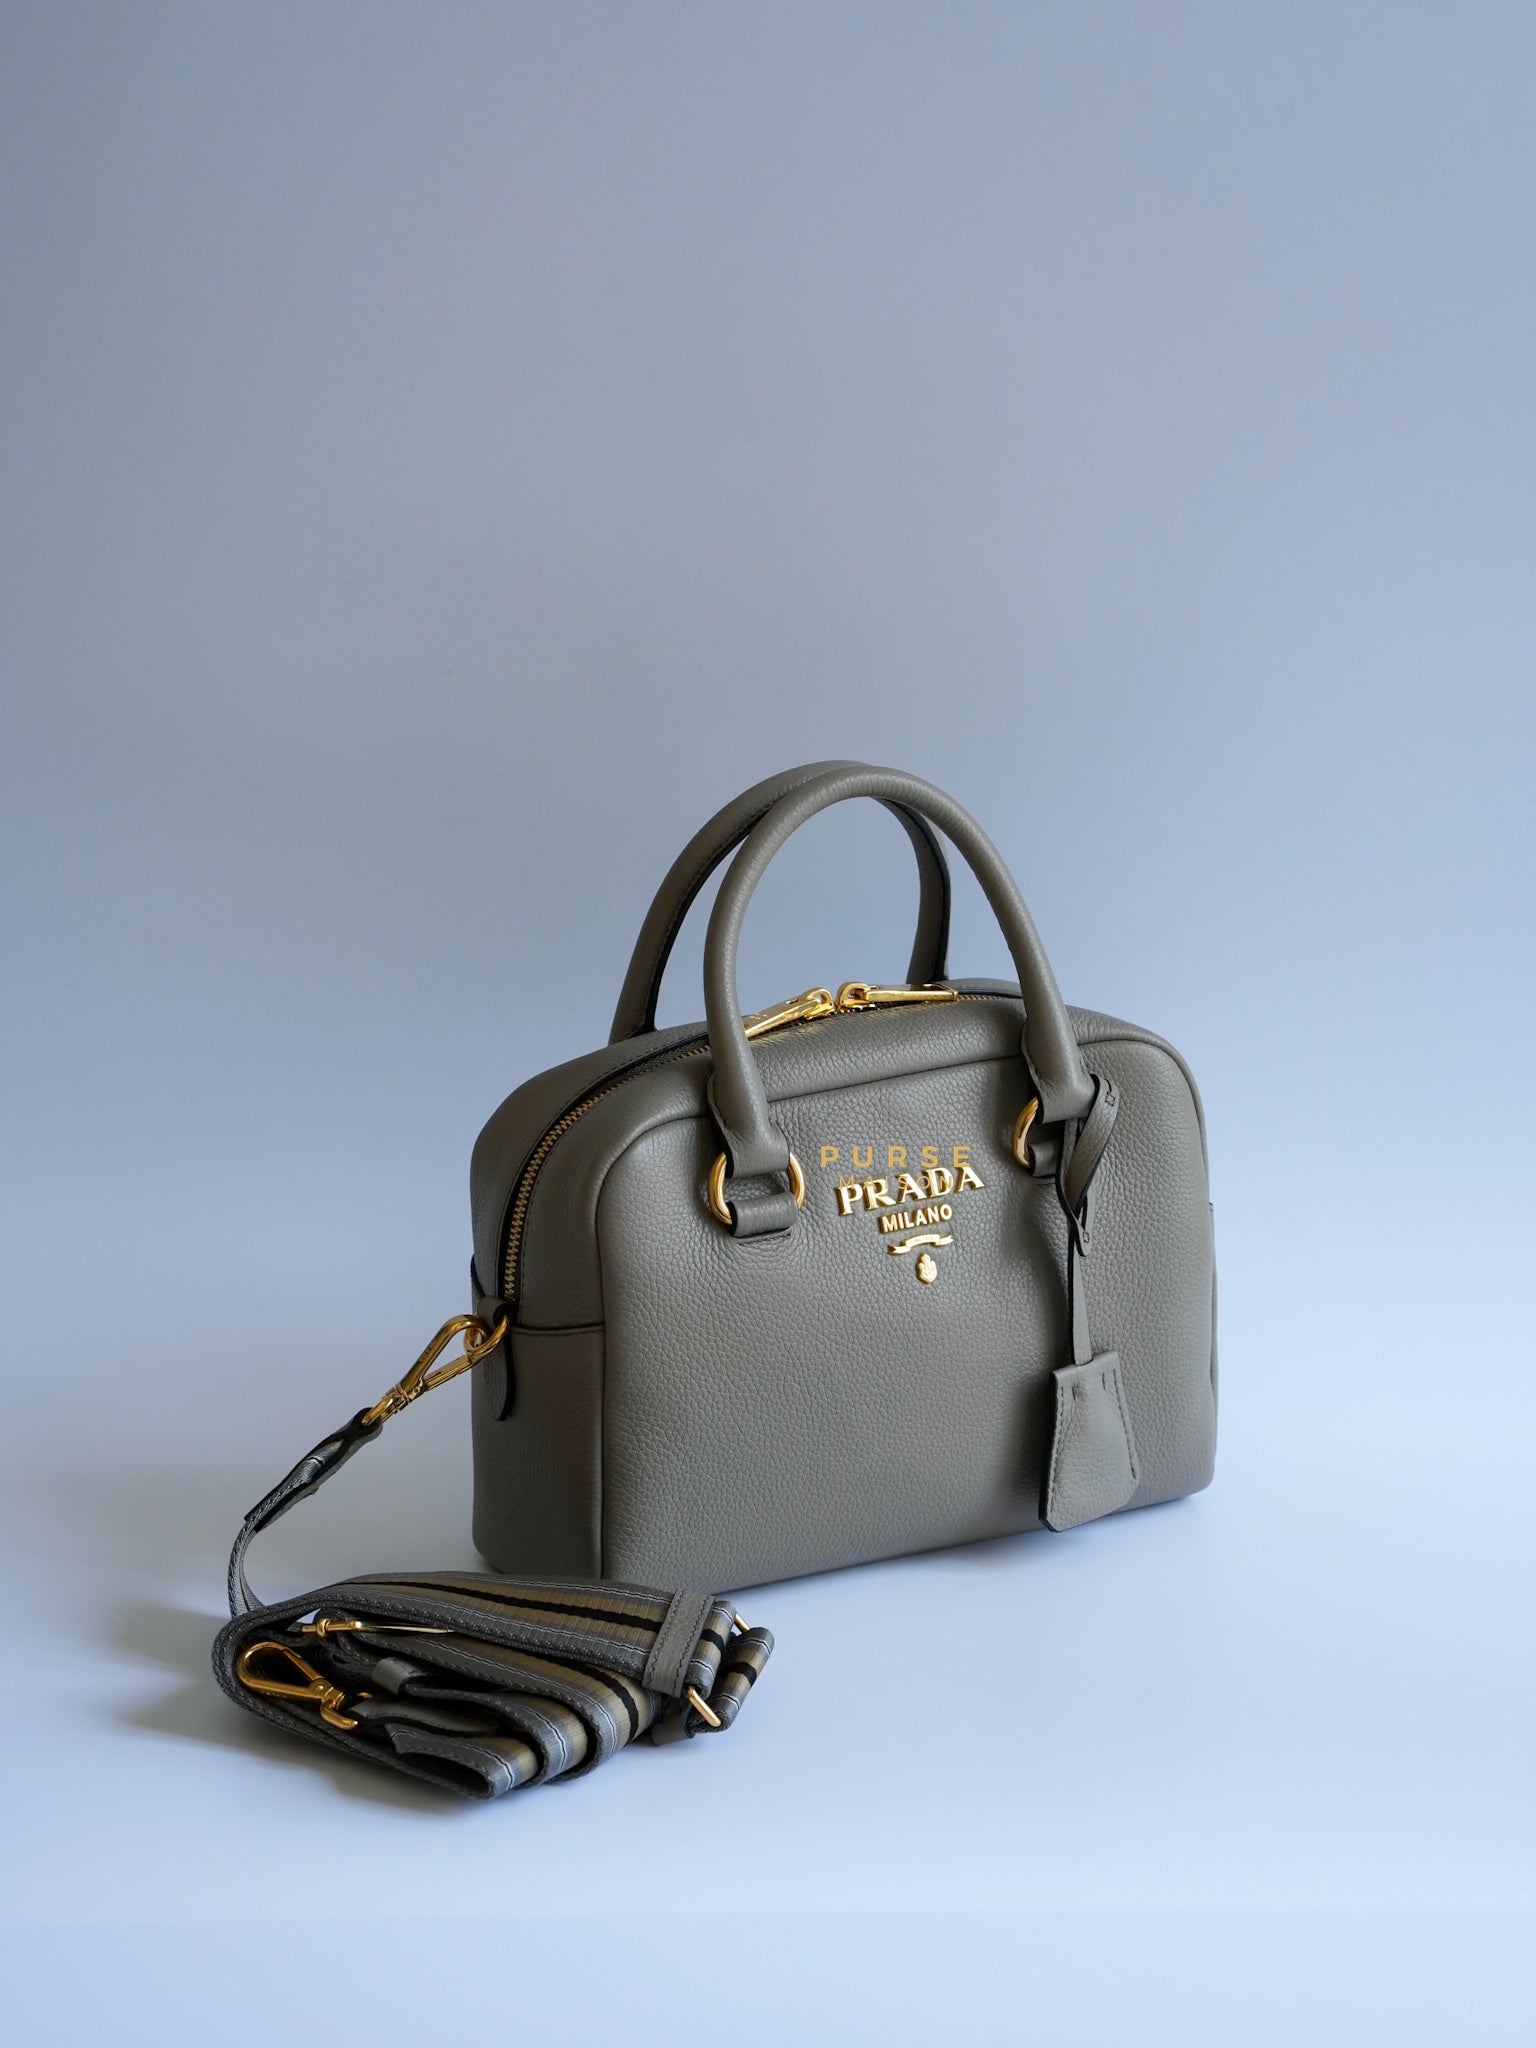 1BB108 Bauletto Gray Vitello Phenix in Gold Hardware | Purse Maison Luxury Bags Shop